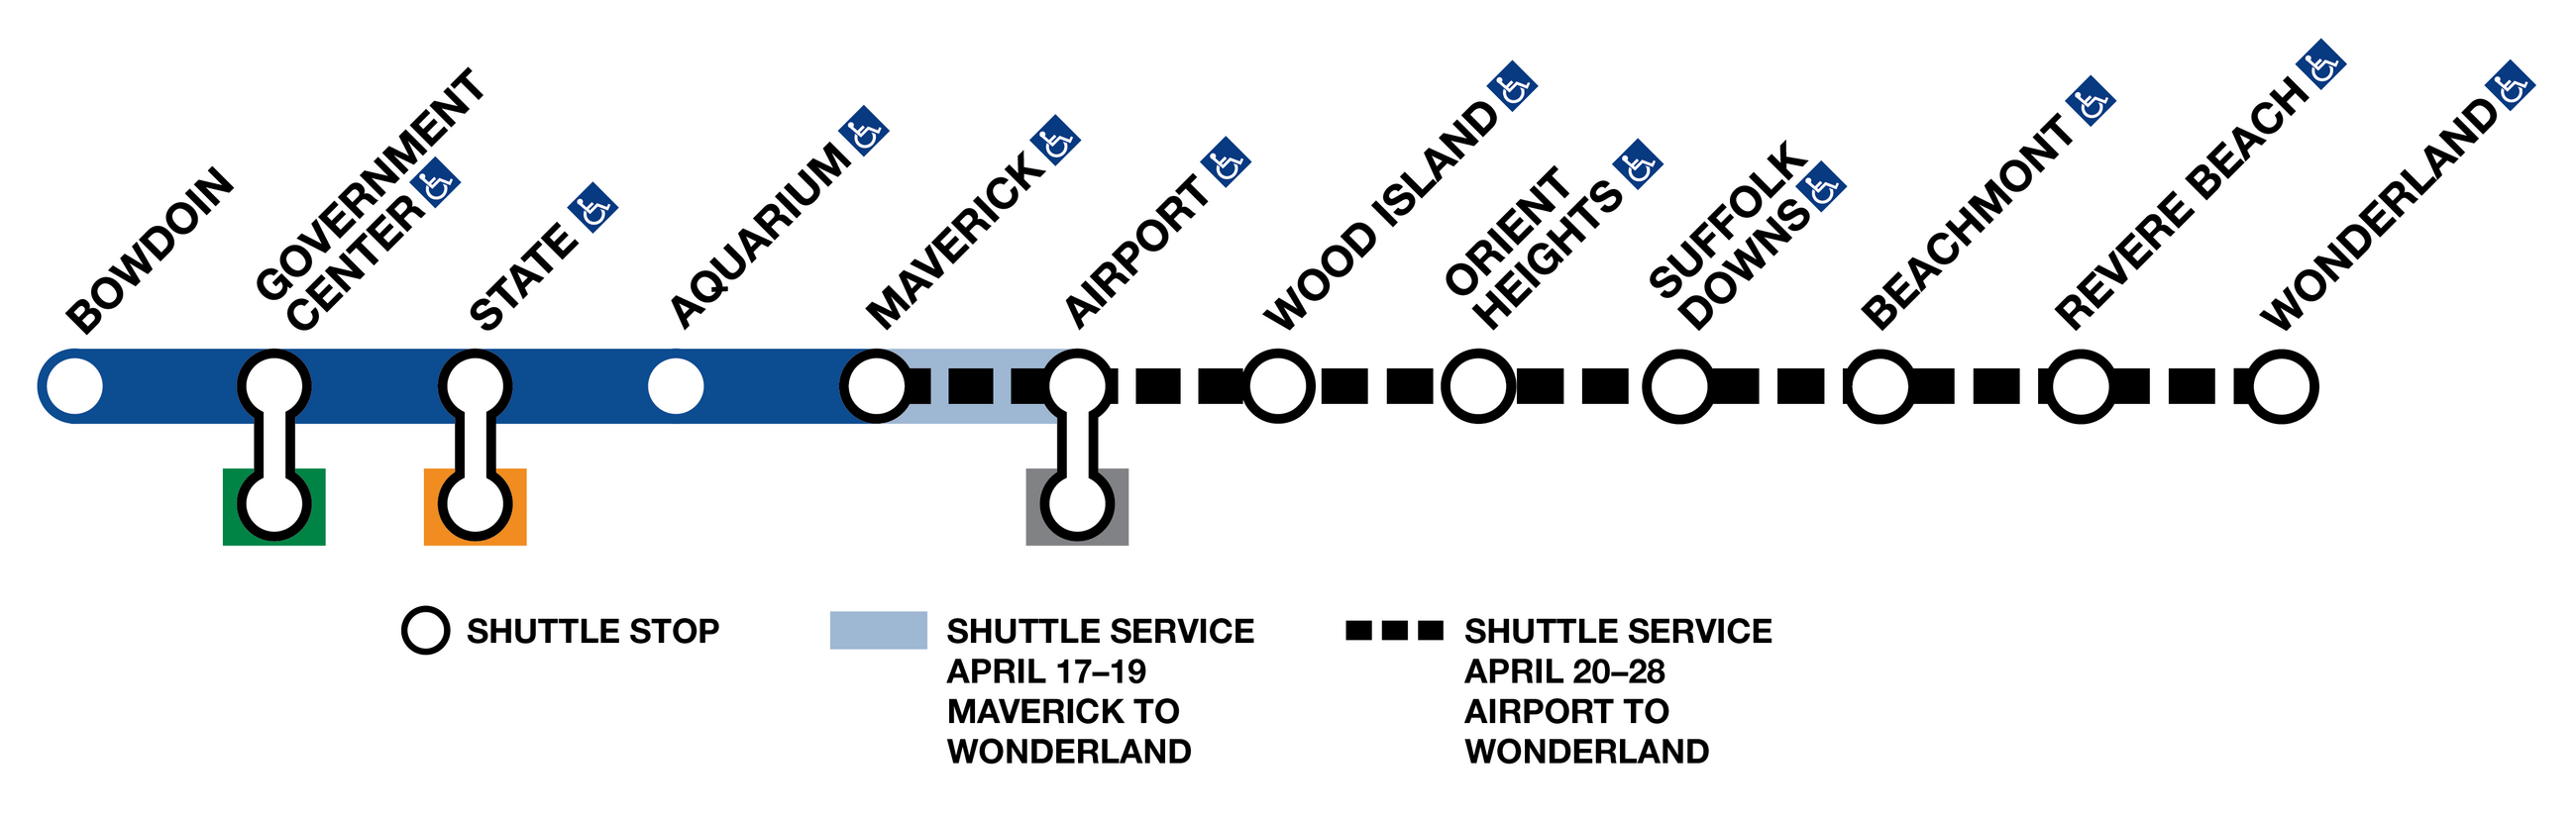 Shuttle service graphic for the Blue Line surge diversion